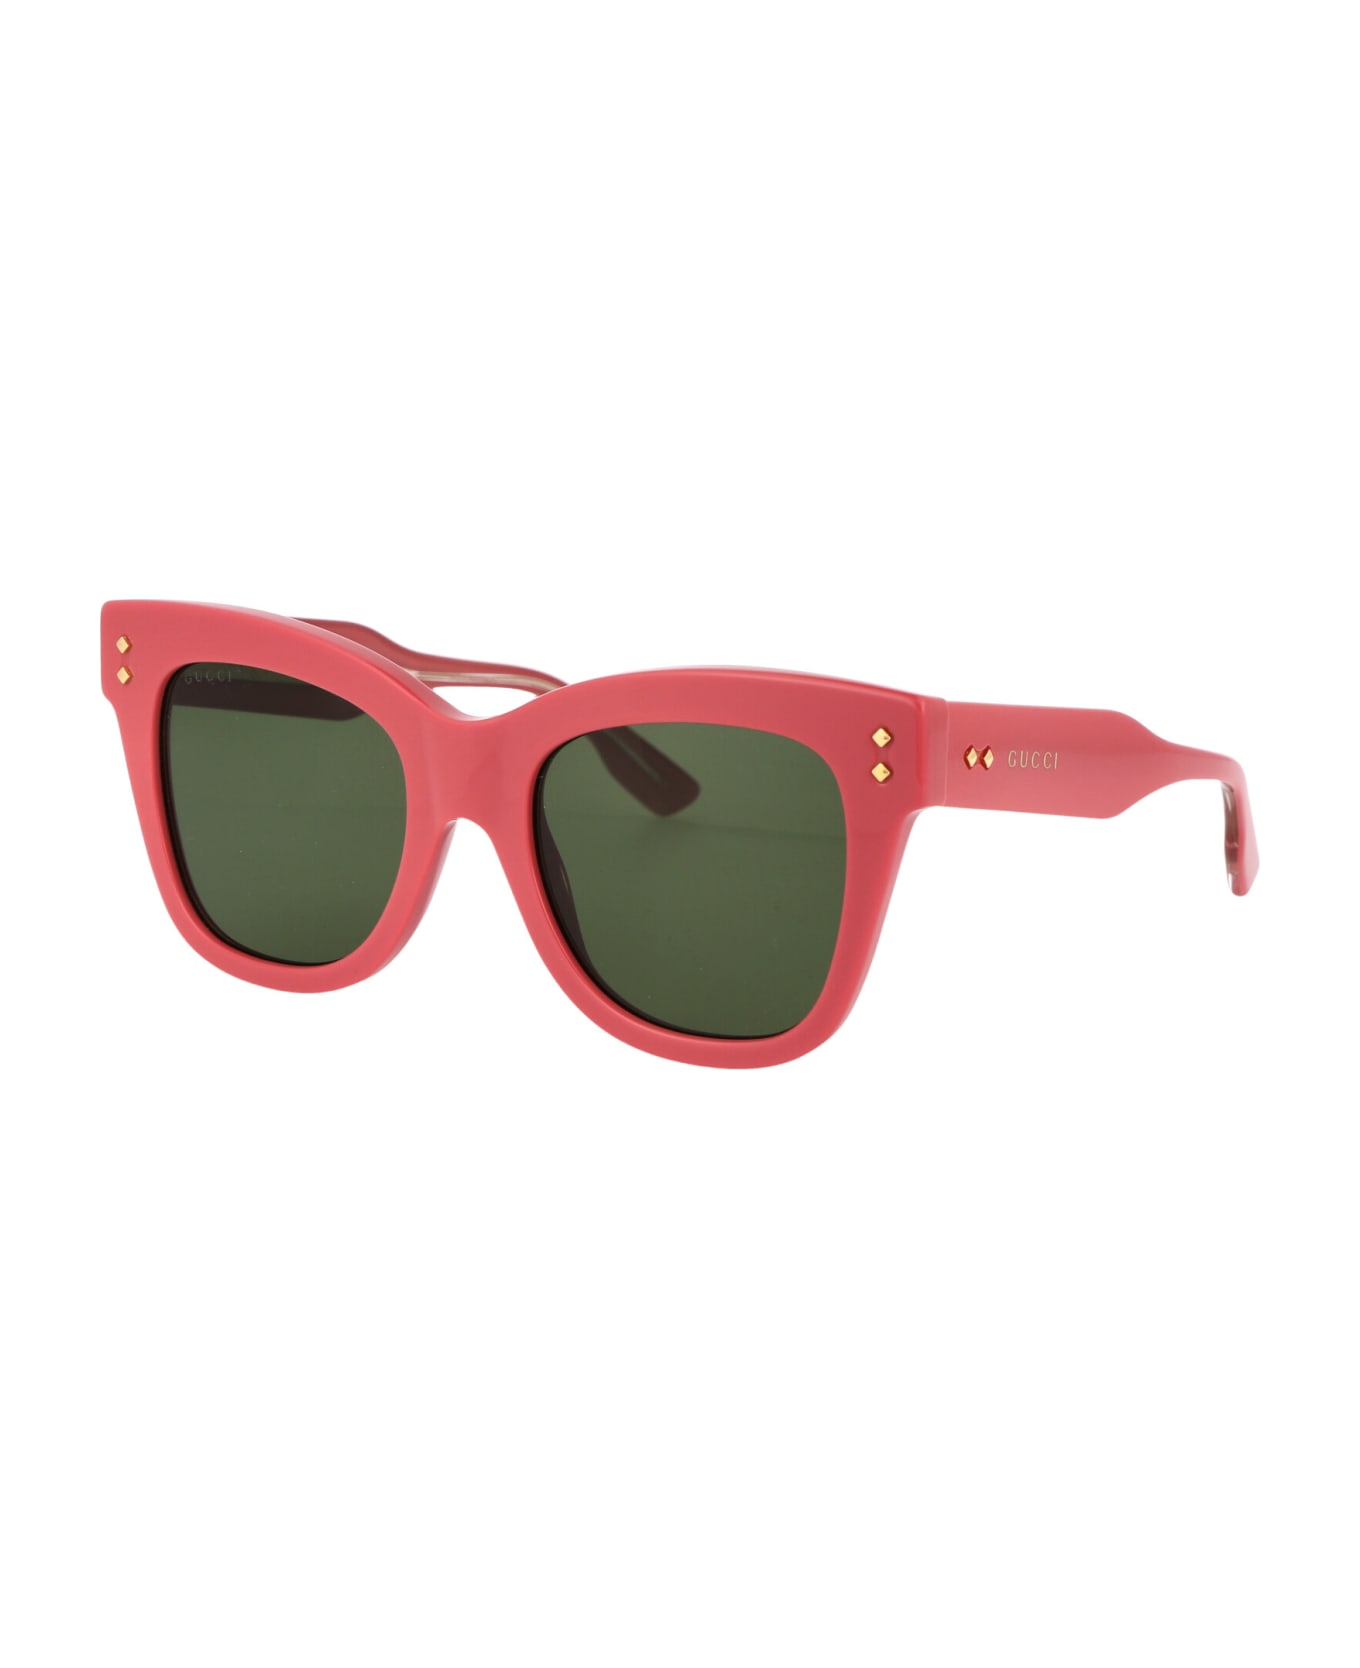 Gucci Eyewear Gg1082s Sunglasses - 004 PINK PINK GREEN